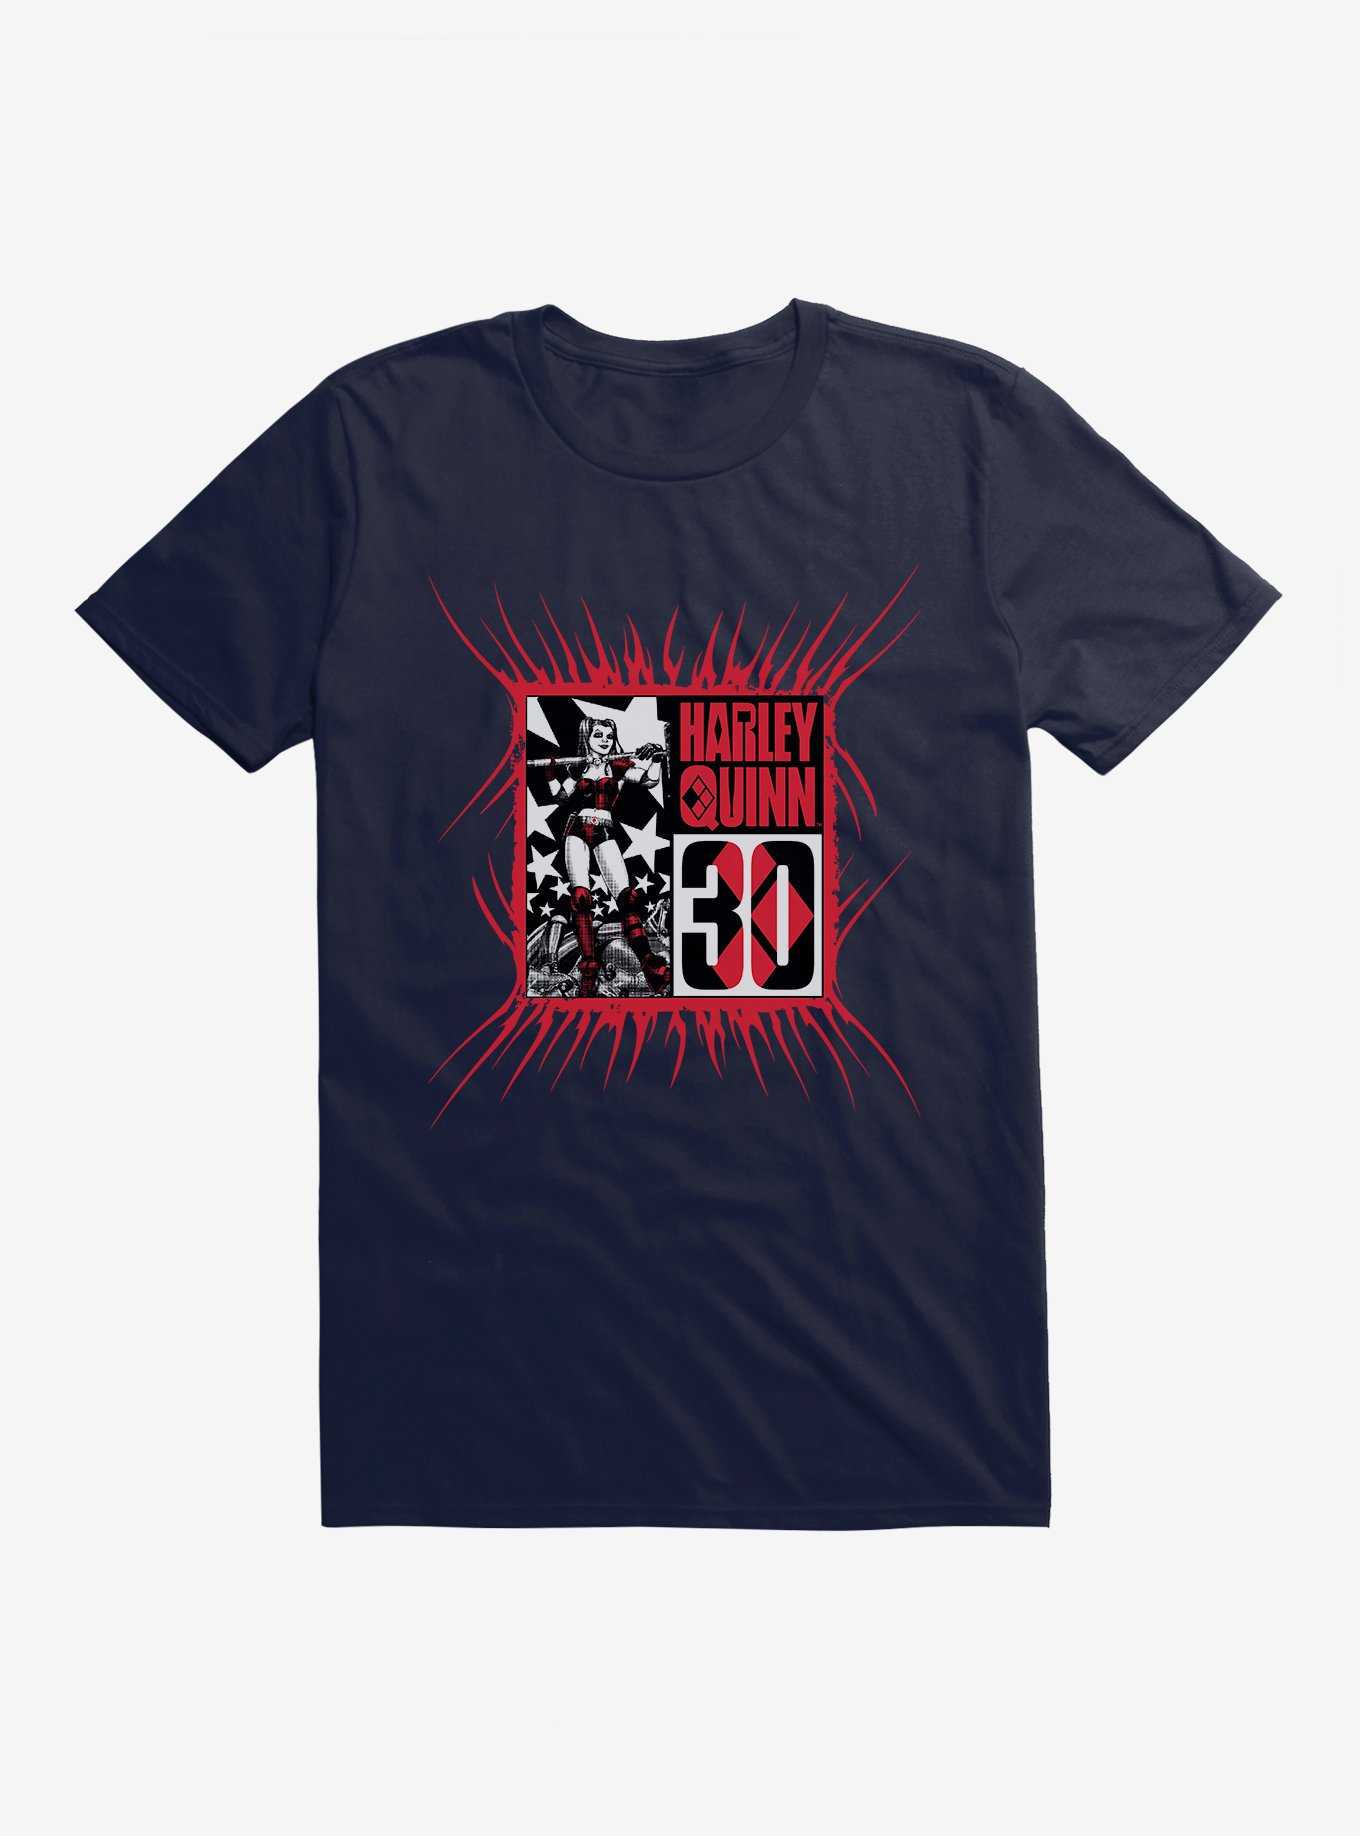 Harley Quinn 30Th Anniversary T-Shirt, , hi-res